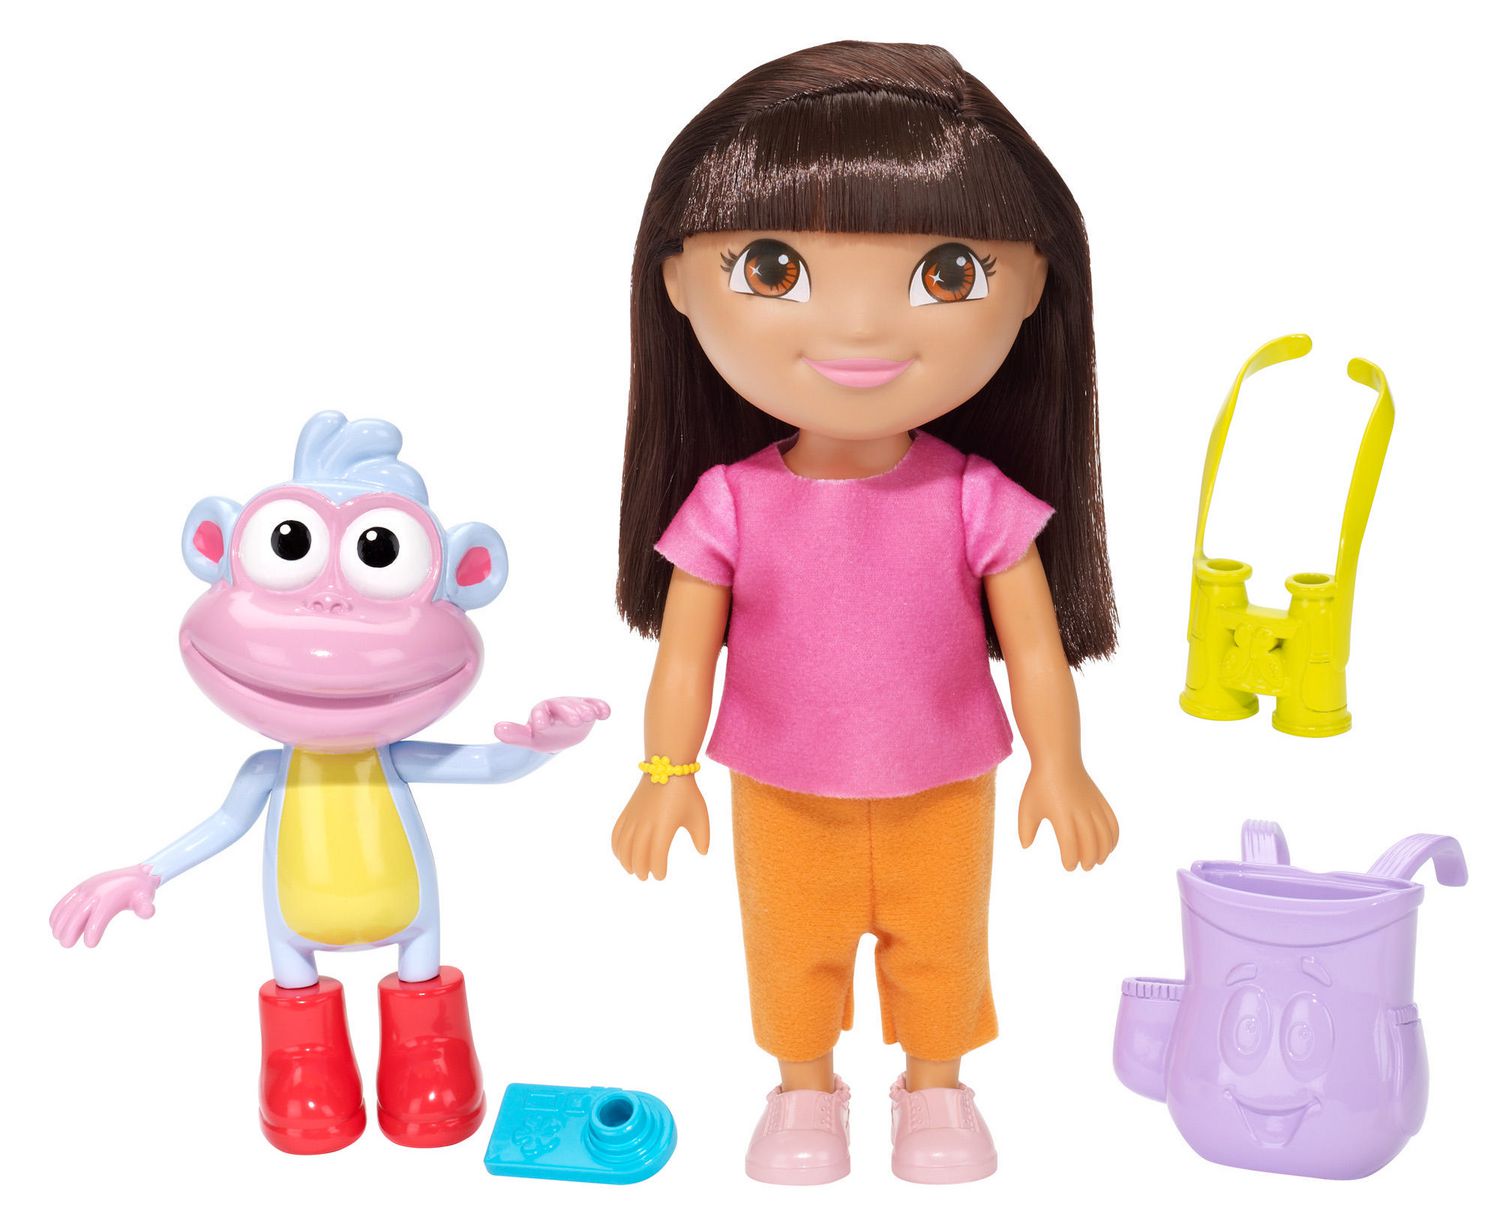 Fisher-Price Nickelodeon Dora the Explorer Ready to Explore Set